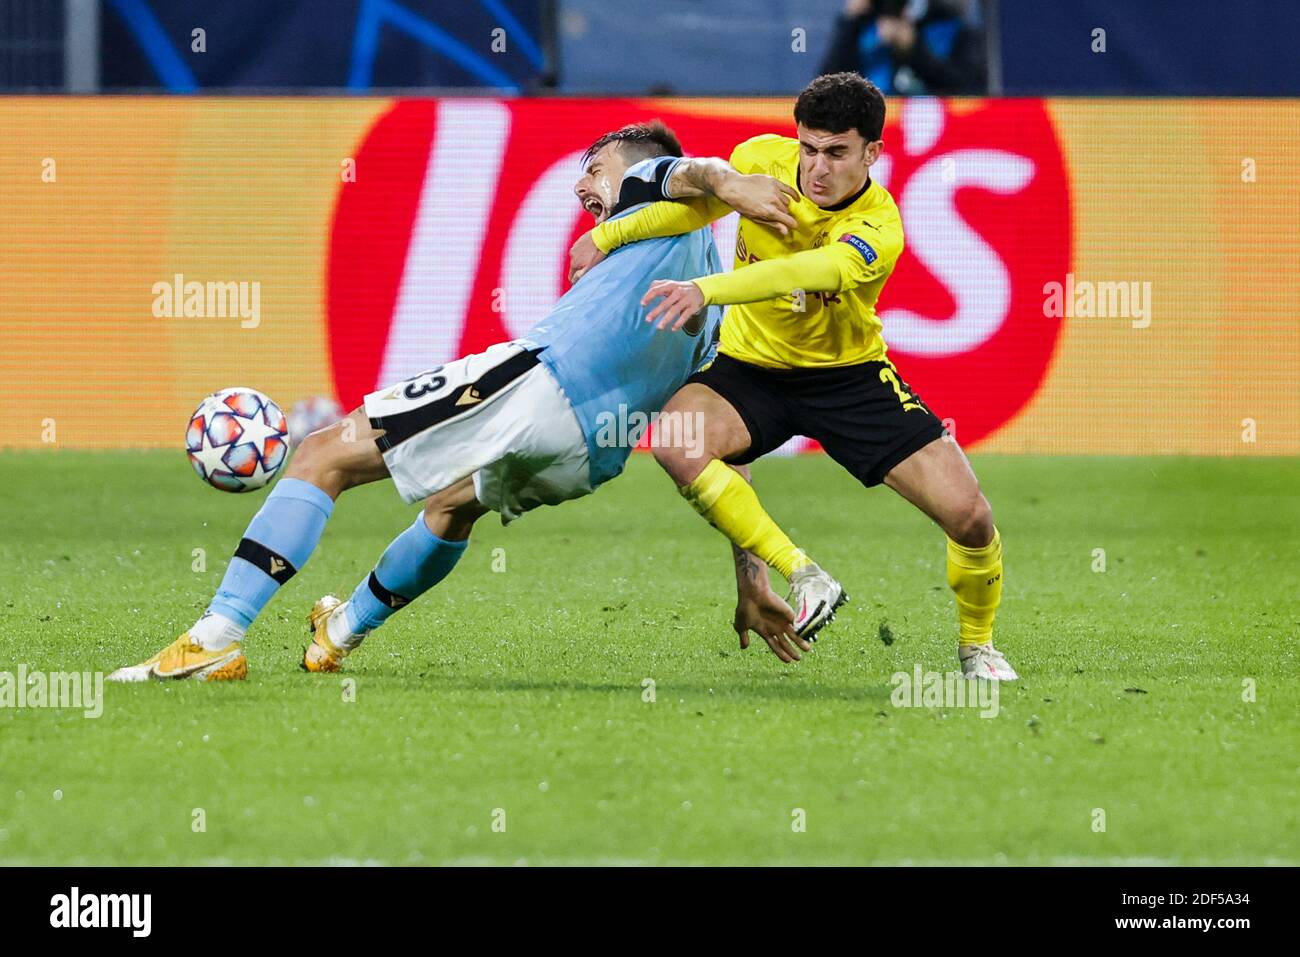 Dortmund, Signal-Iduna-Park, 02.12.20: Mateu Morey (Dortmund, re.) gegen Francesco Acerbi (Rom) im Championsleague Spiel Borussia Dortmund vs Lazio R. Foto Stock